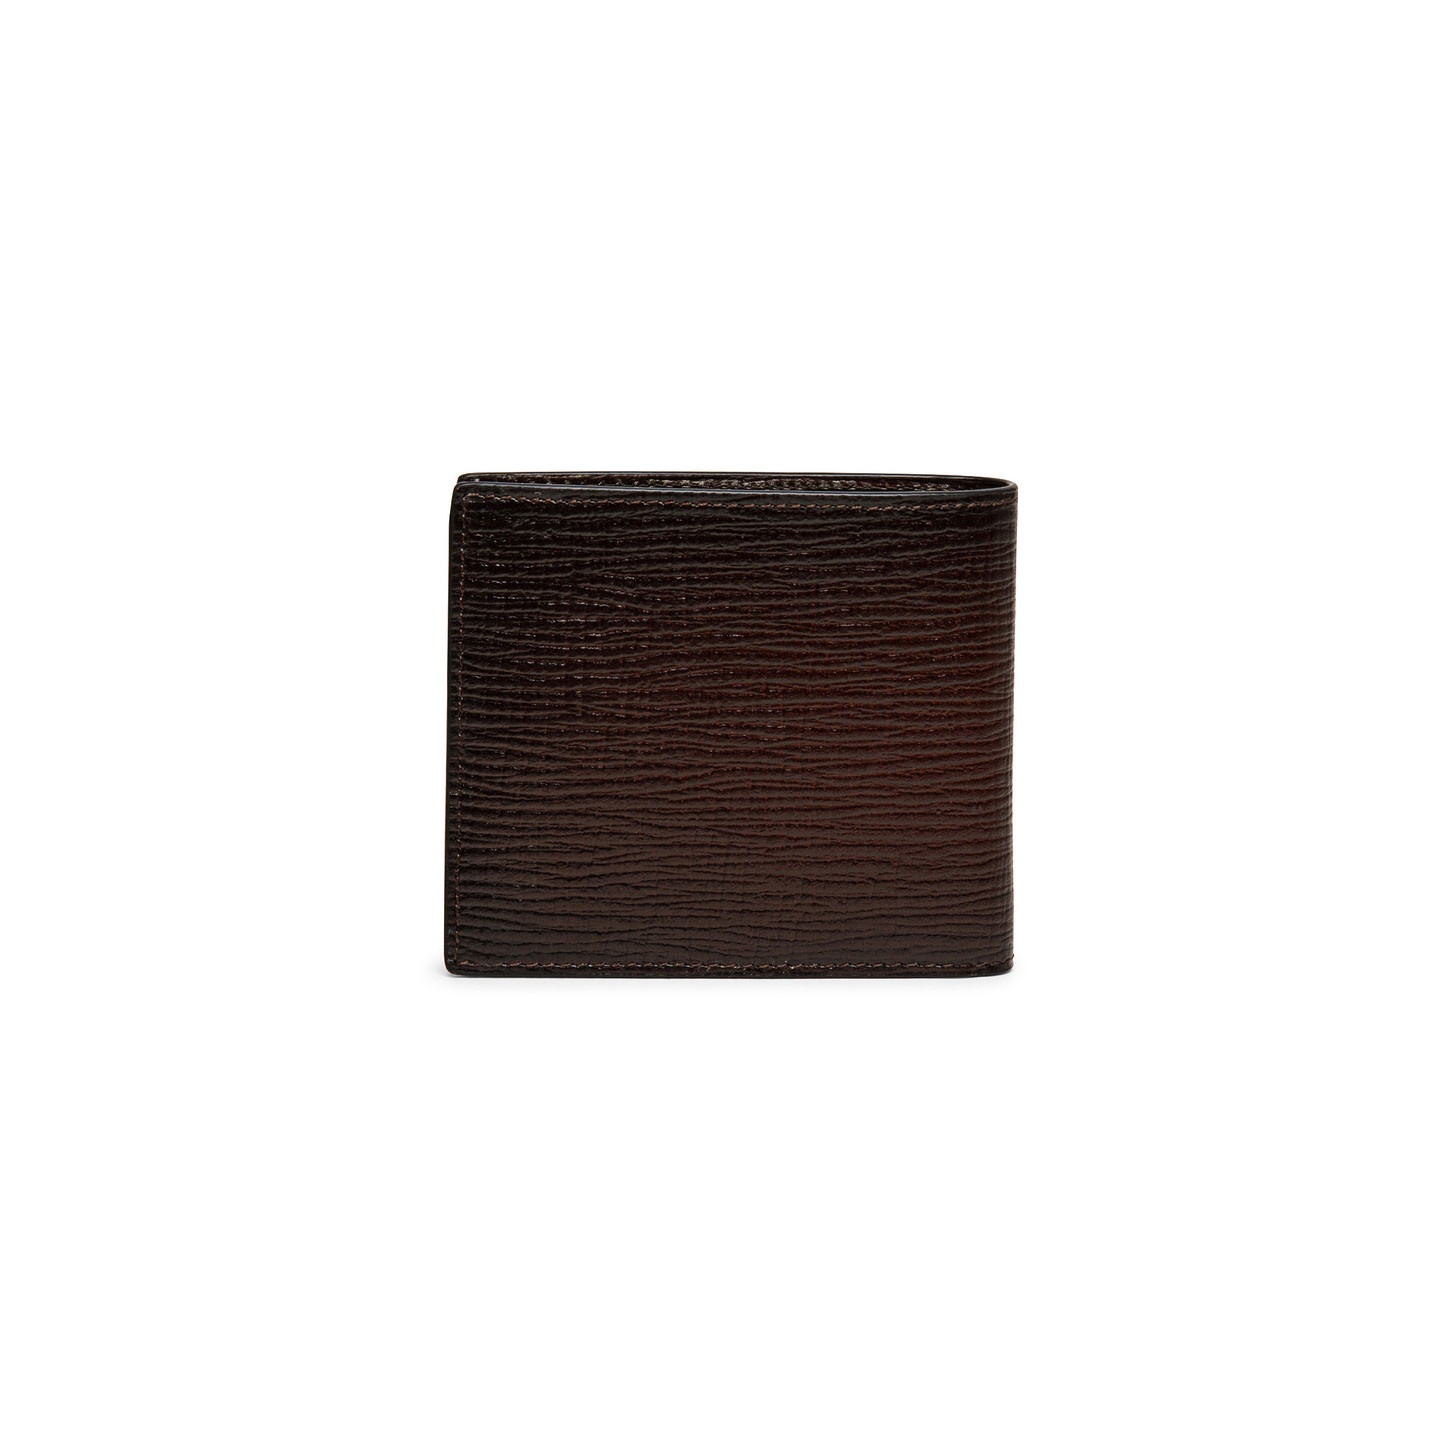 Brown embossed leather wallet - 2